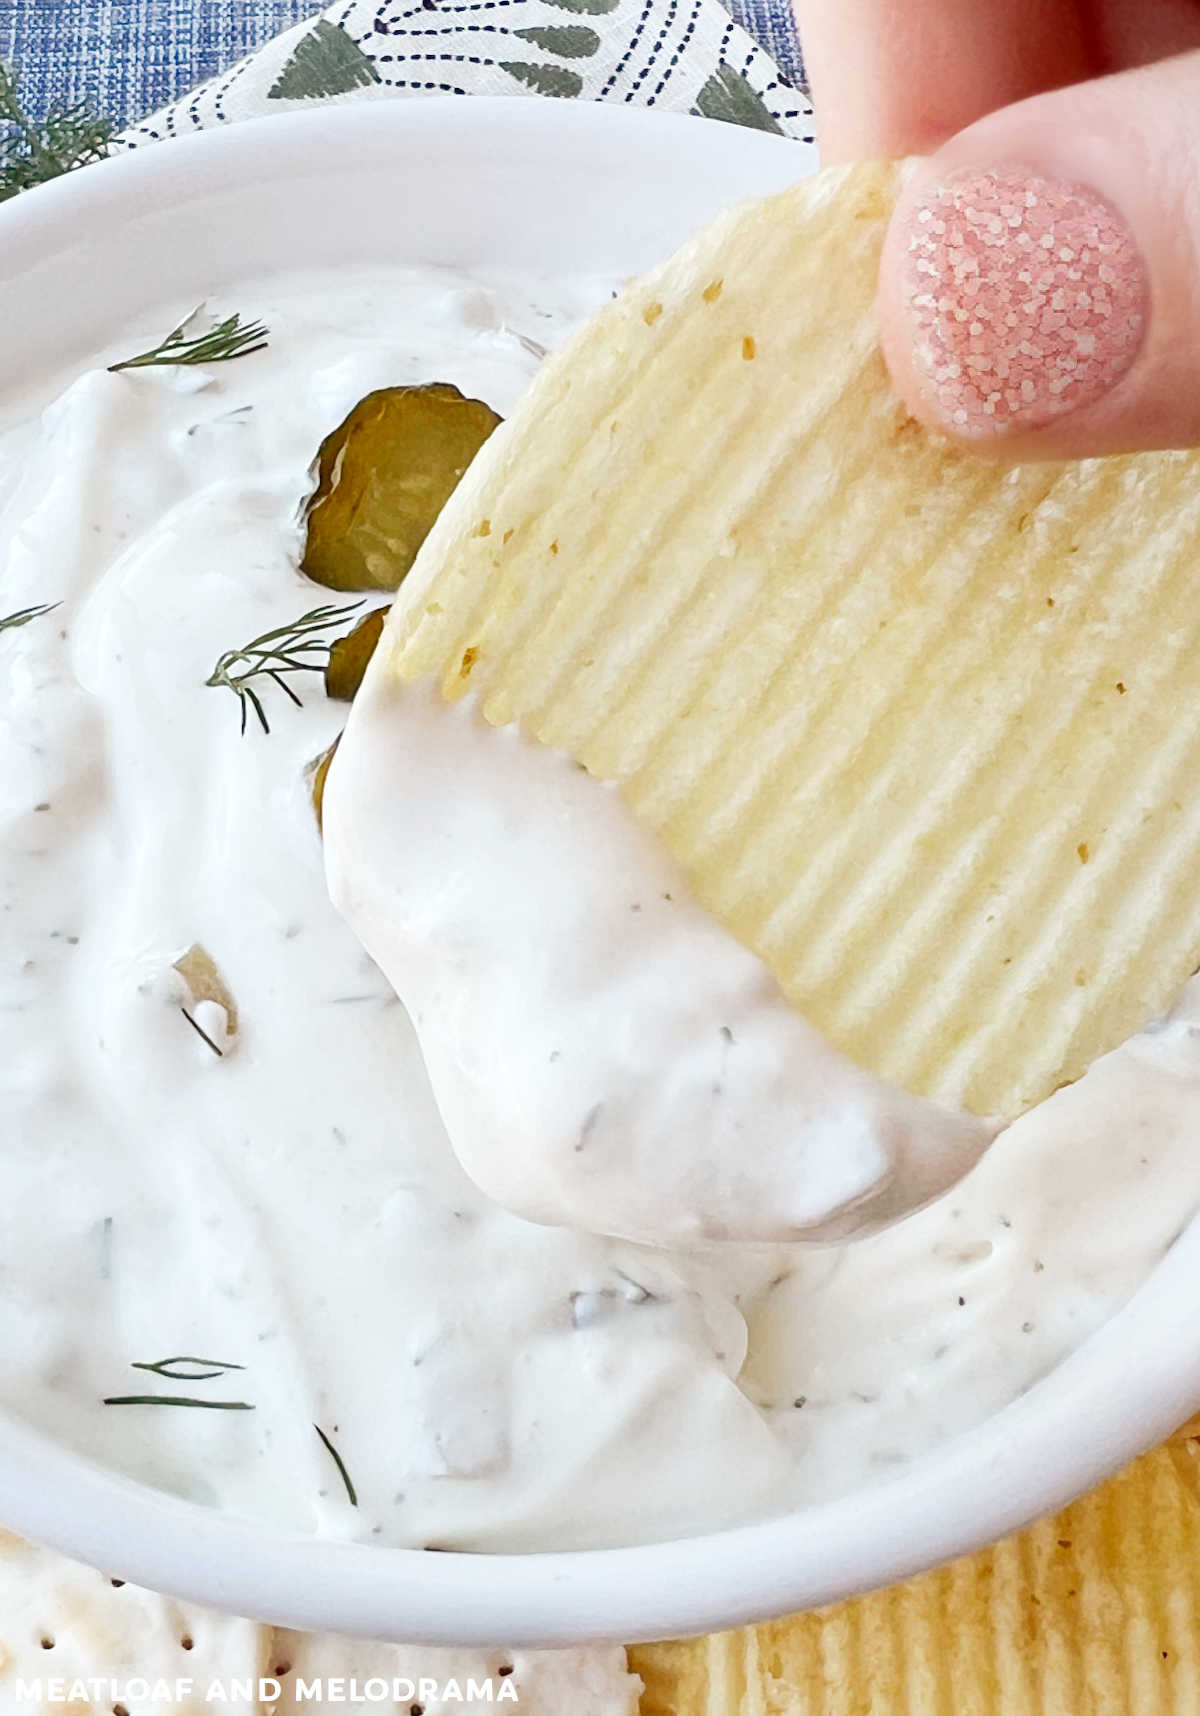 dip potato chip into creamy dill pickle dip